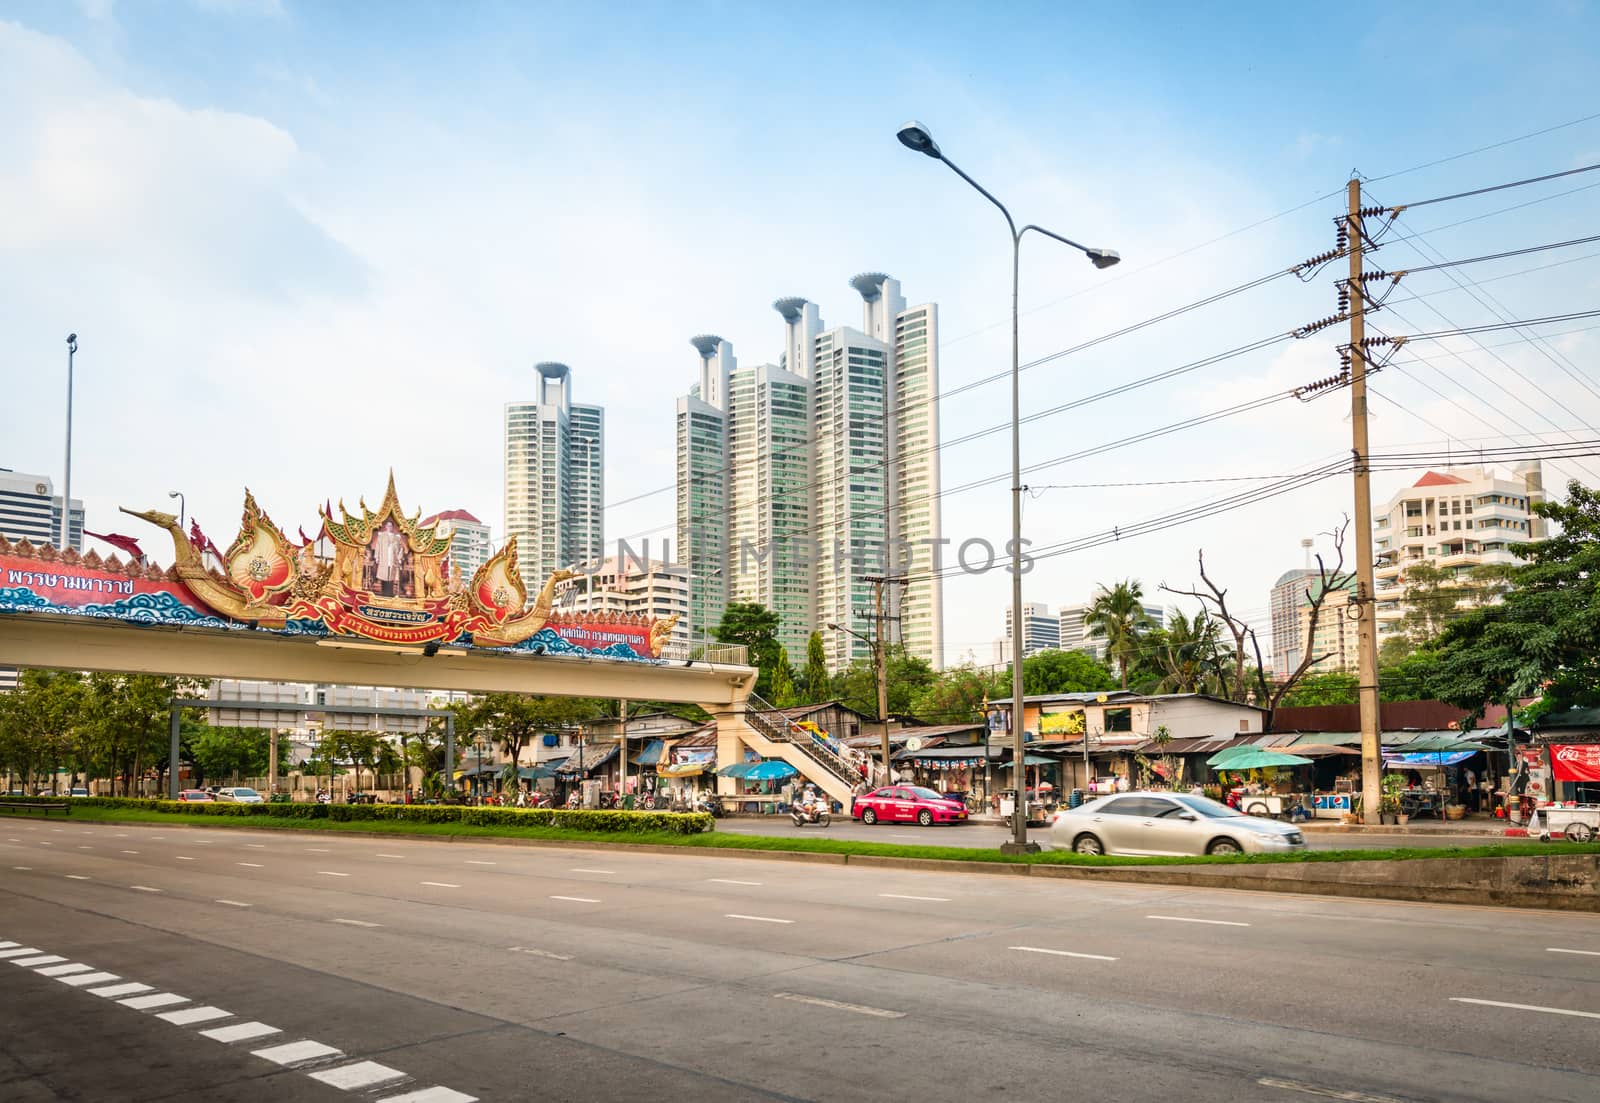 BANGKOK, THAILAND - 21 NOV 2013: Wide street under bridge with portrait of the King of Thailand Bhumibol Adulyadej (Rama IX) and modernt buildings skyscrapers on background